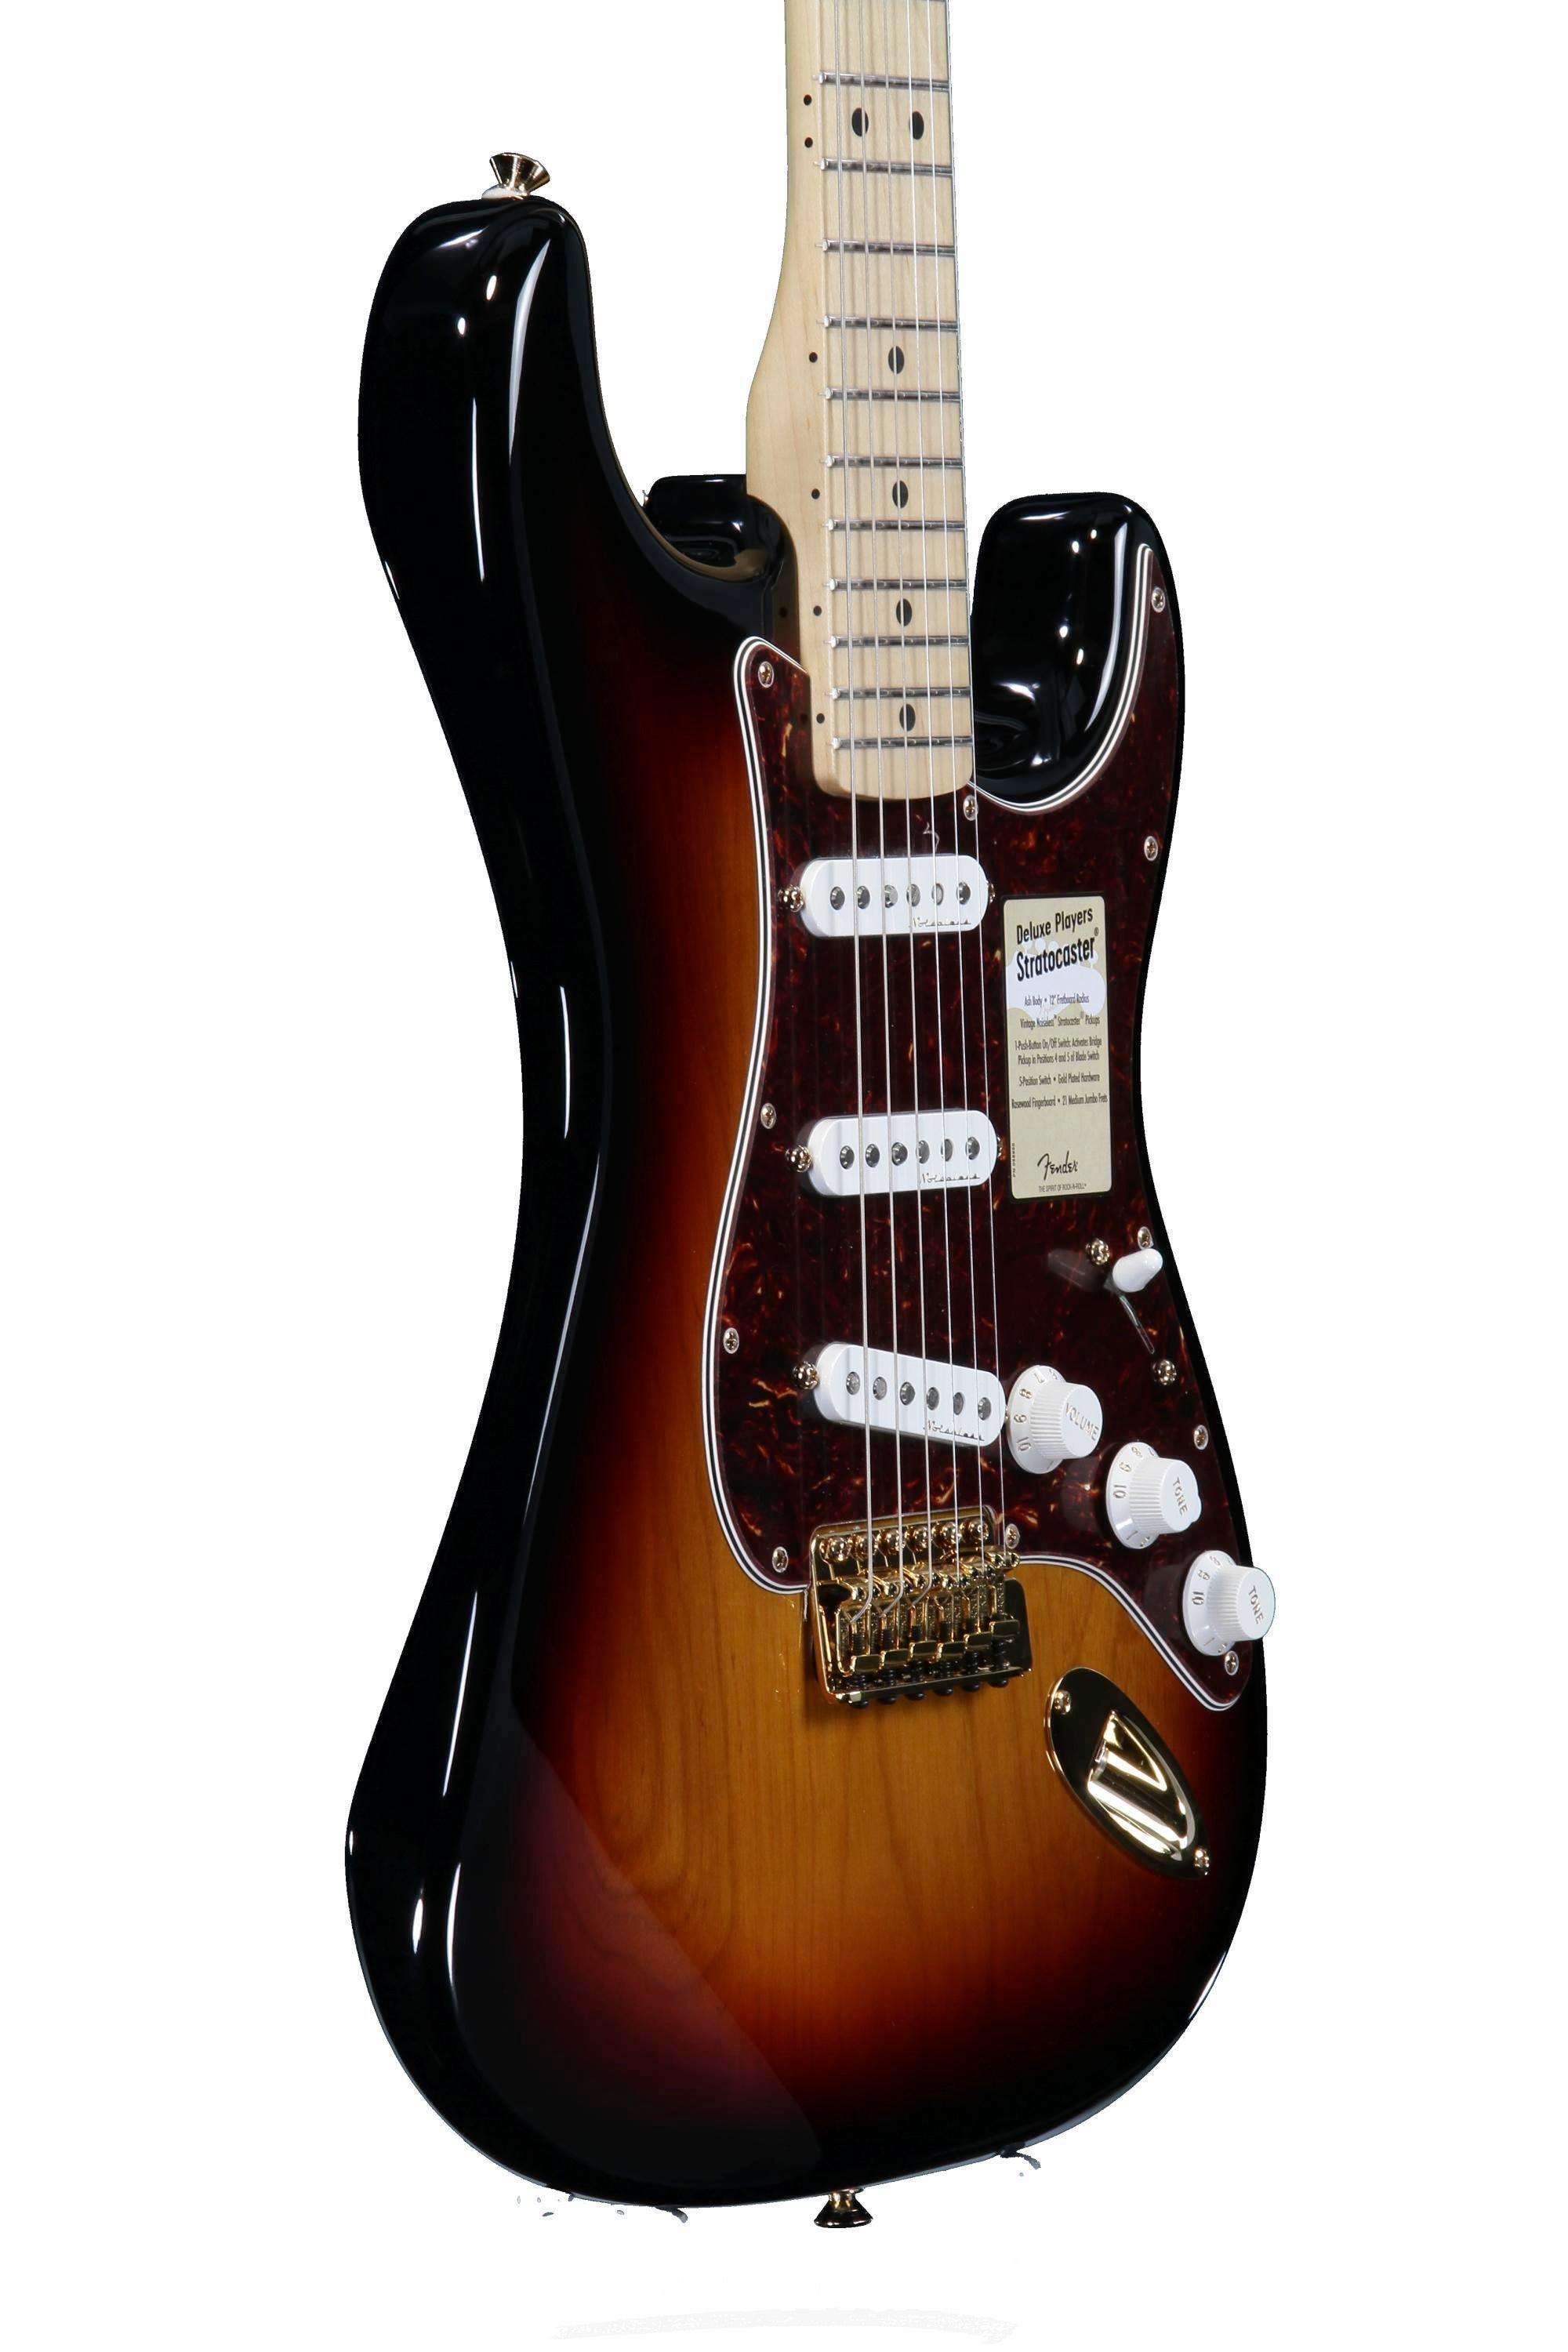 Fender Deluxe Player's Stratocaster 2014Mode